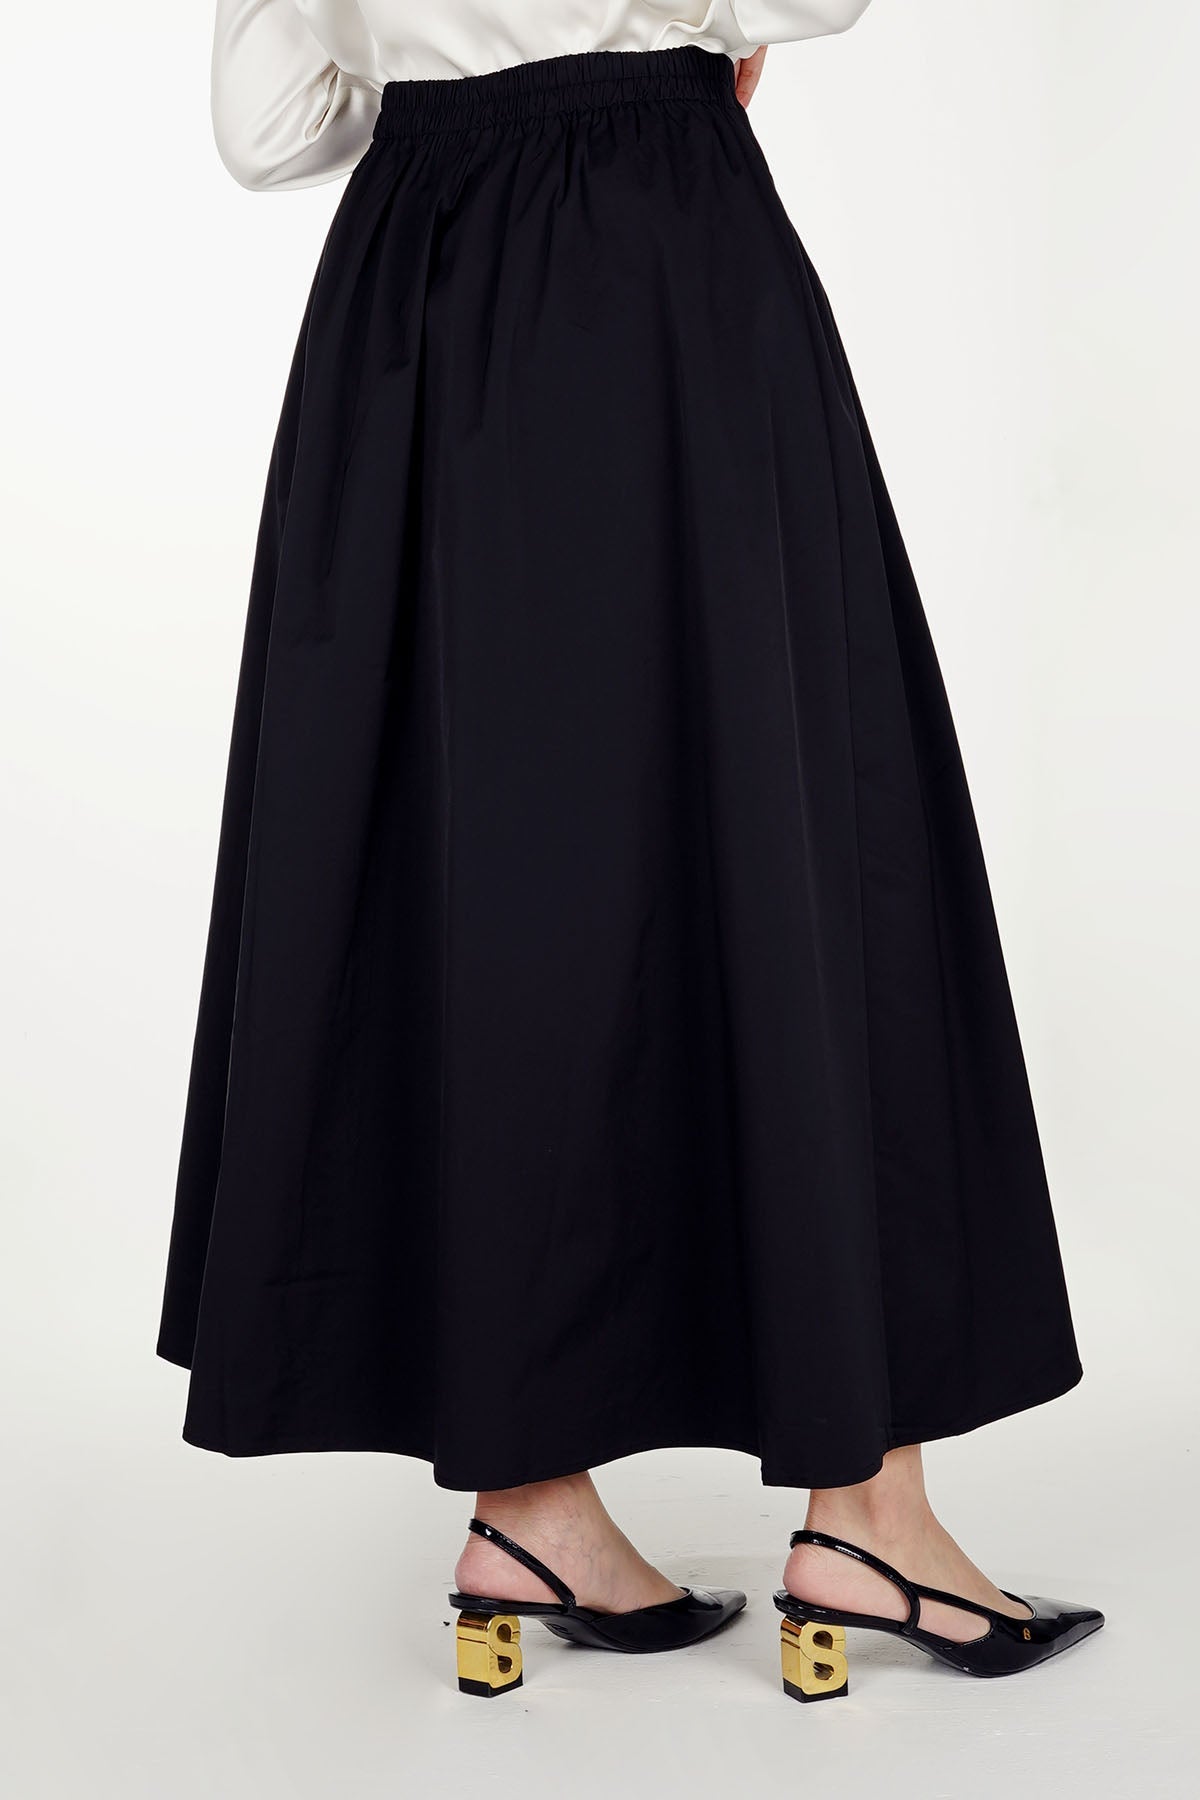 Zalia Waist Skirt - Black